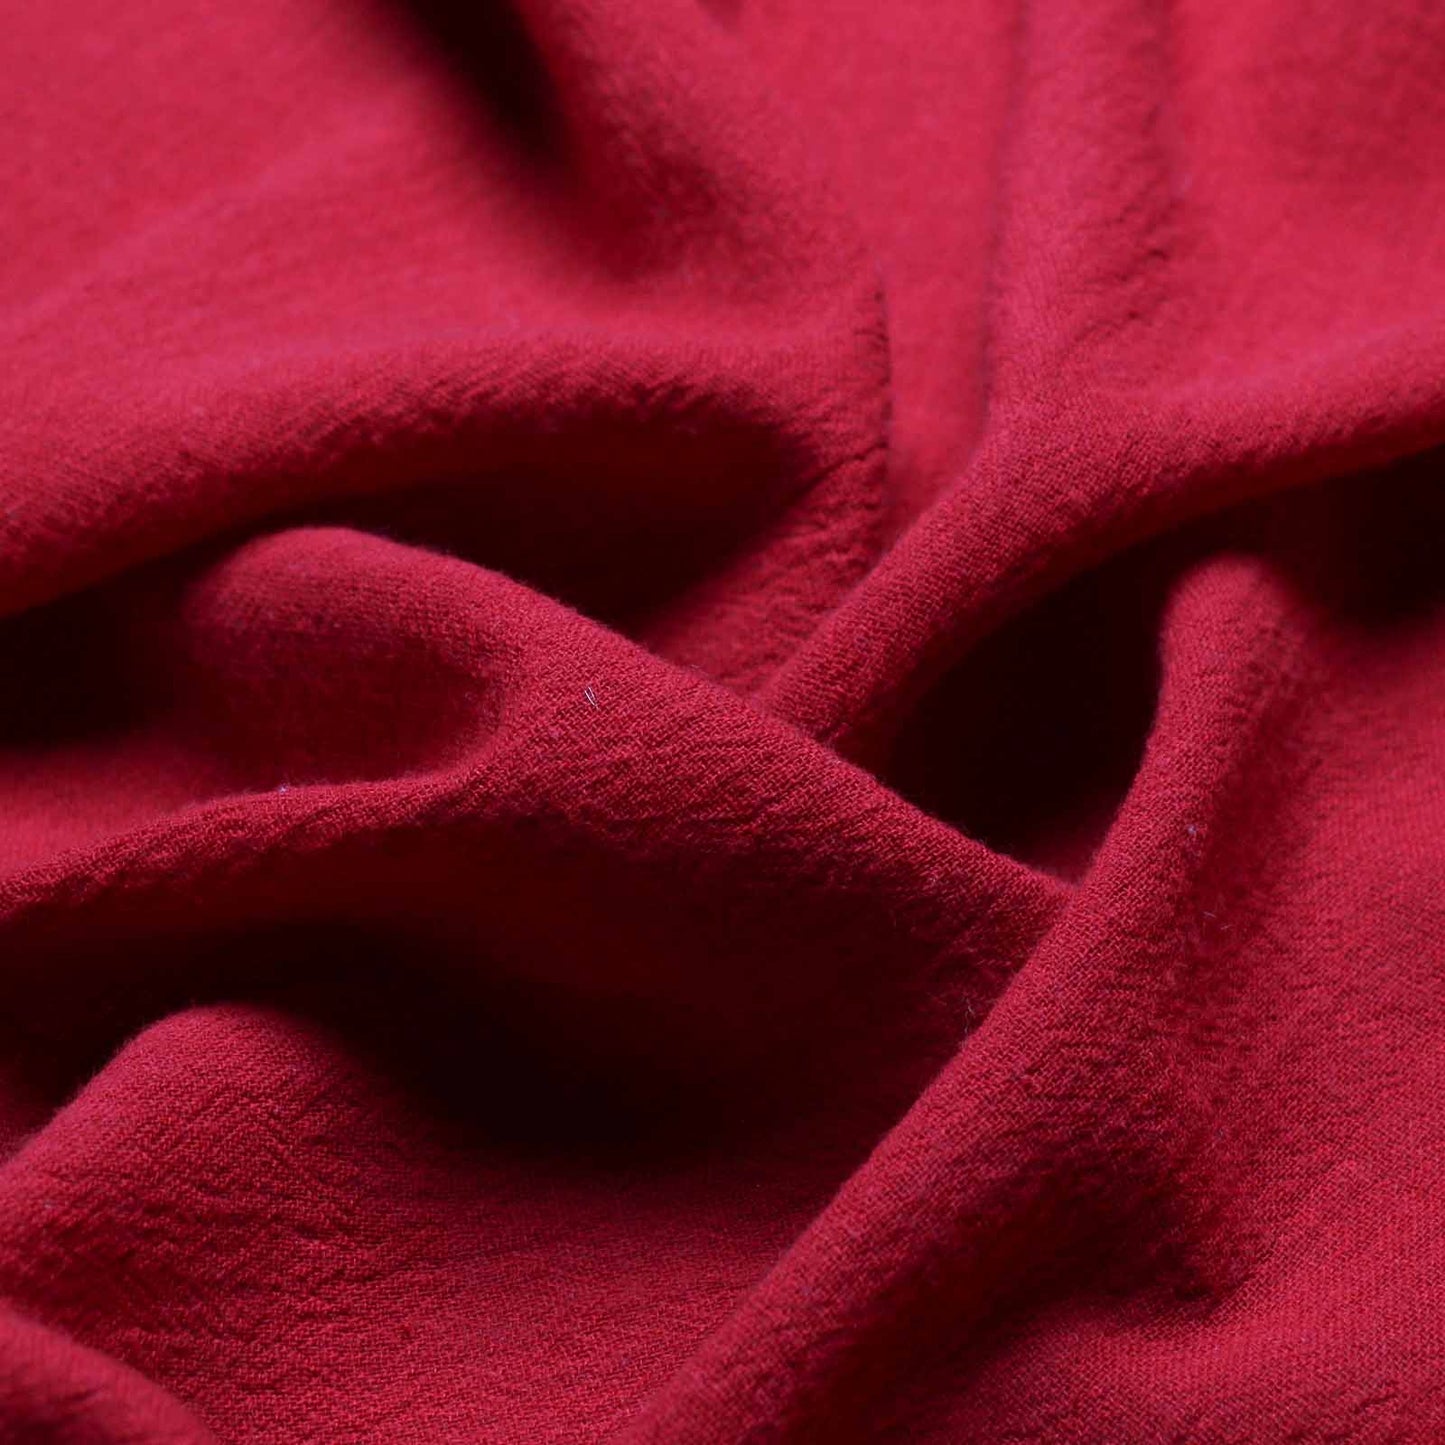 crinkle textured plain red cotton gauze dressmaking fabric